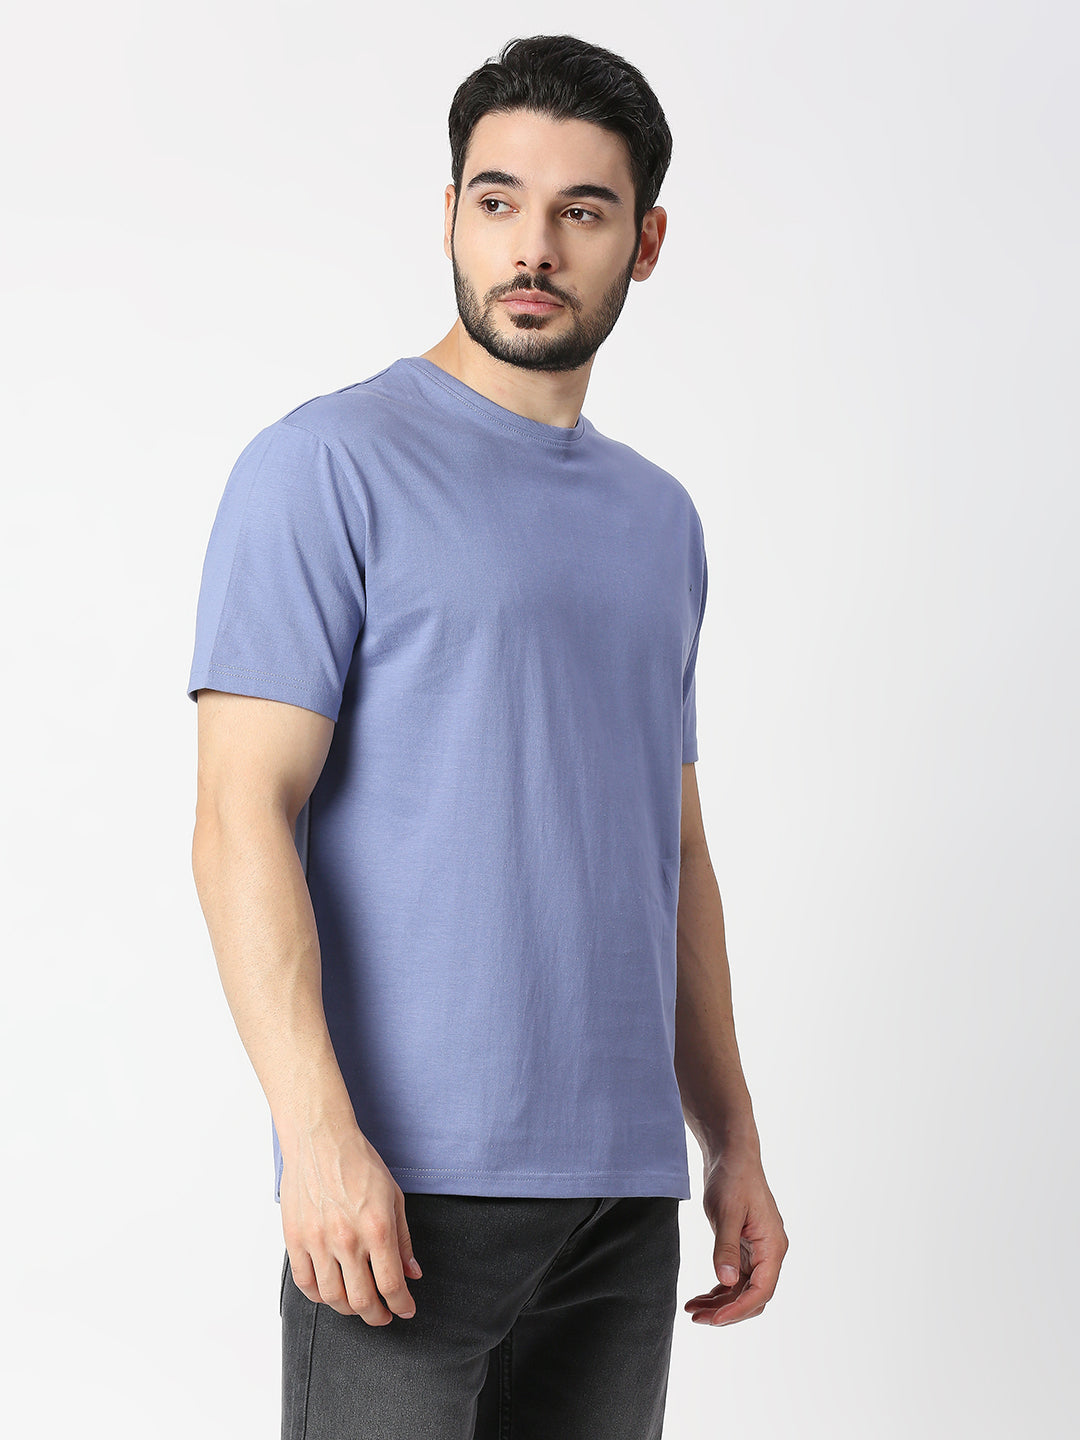 Buy Blamblack Solid Dark Blue Half Sleeved T-shirt